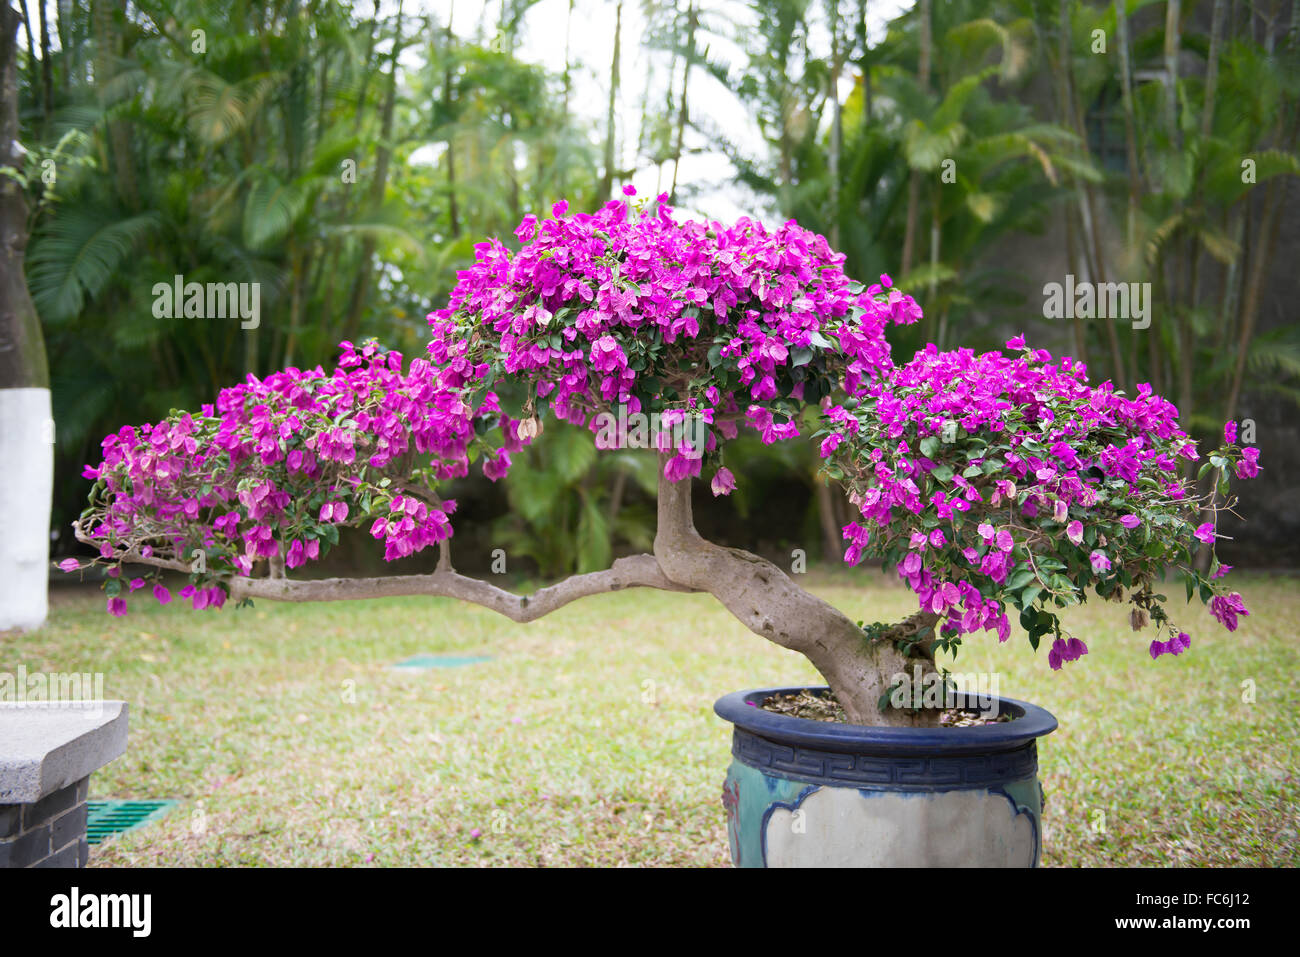 Bonsai-Baum mit lila Blüten in Blumentopf Stockfotografie - Alamy